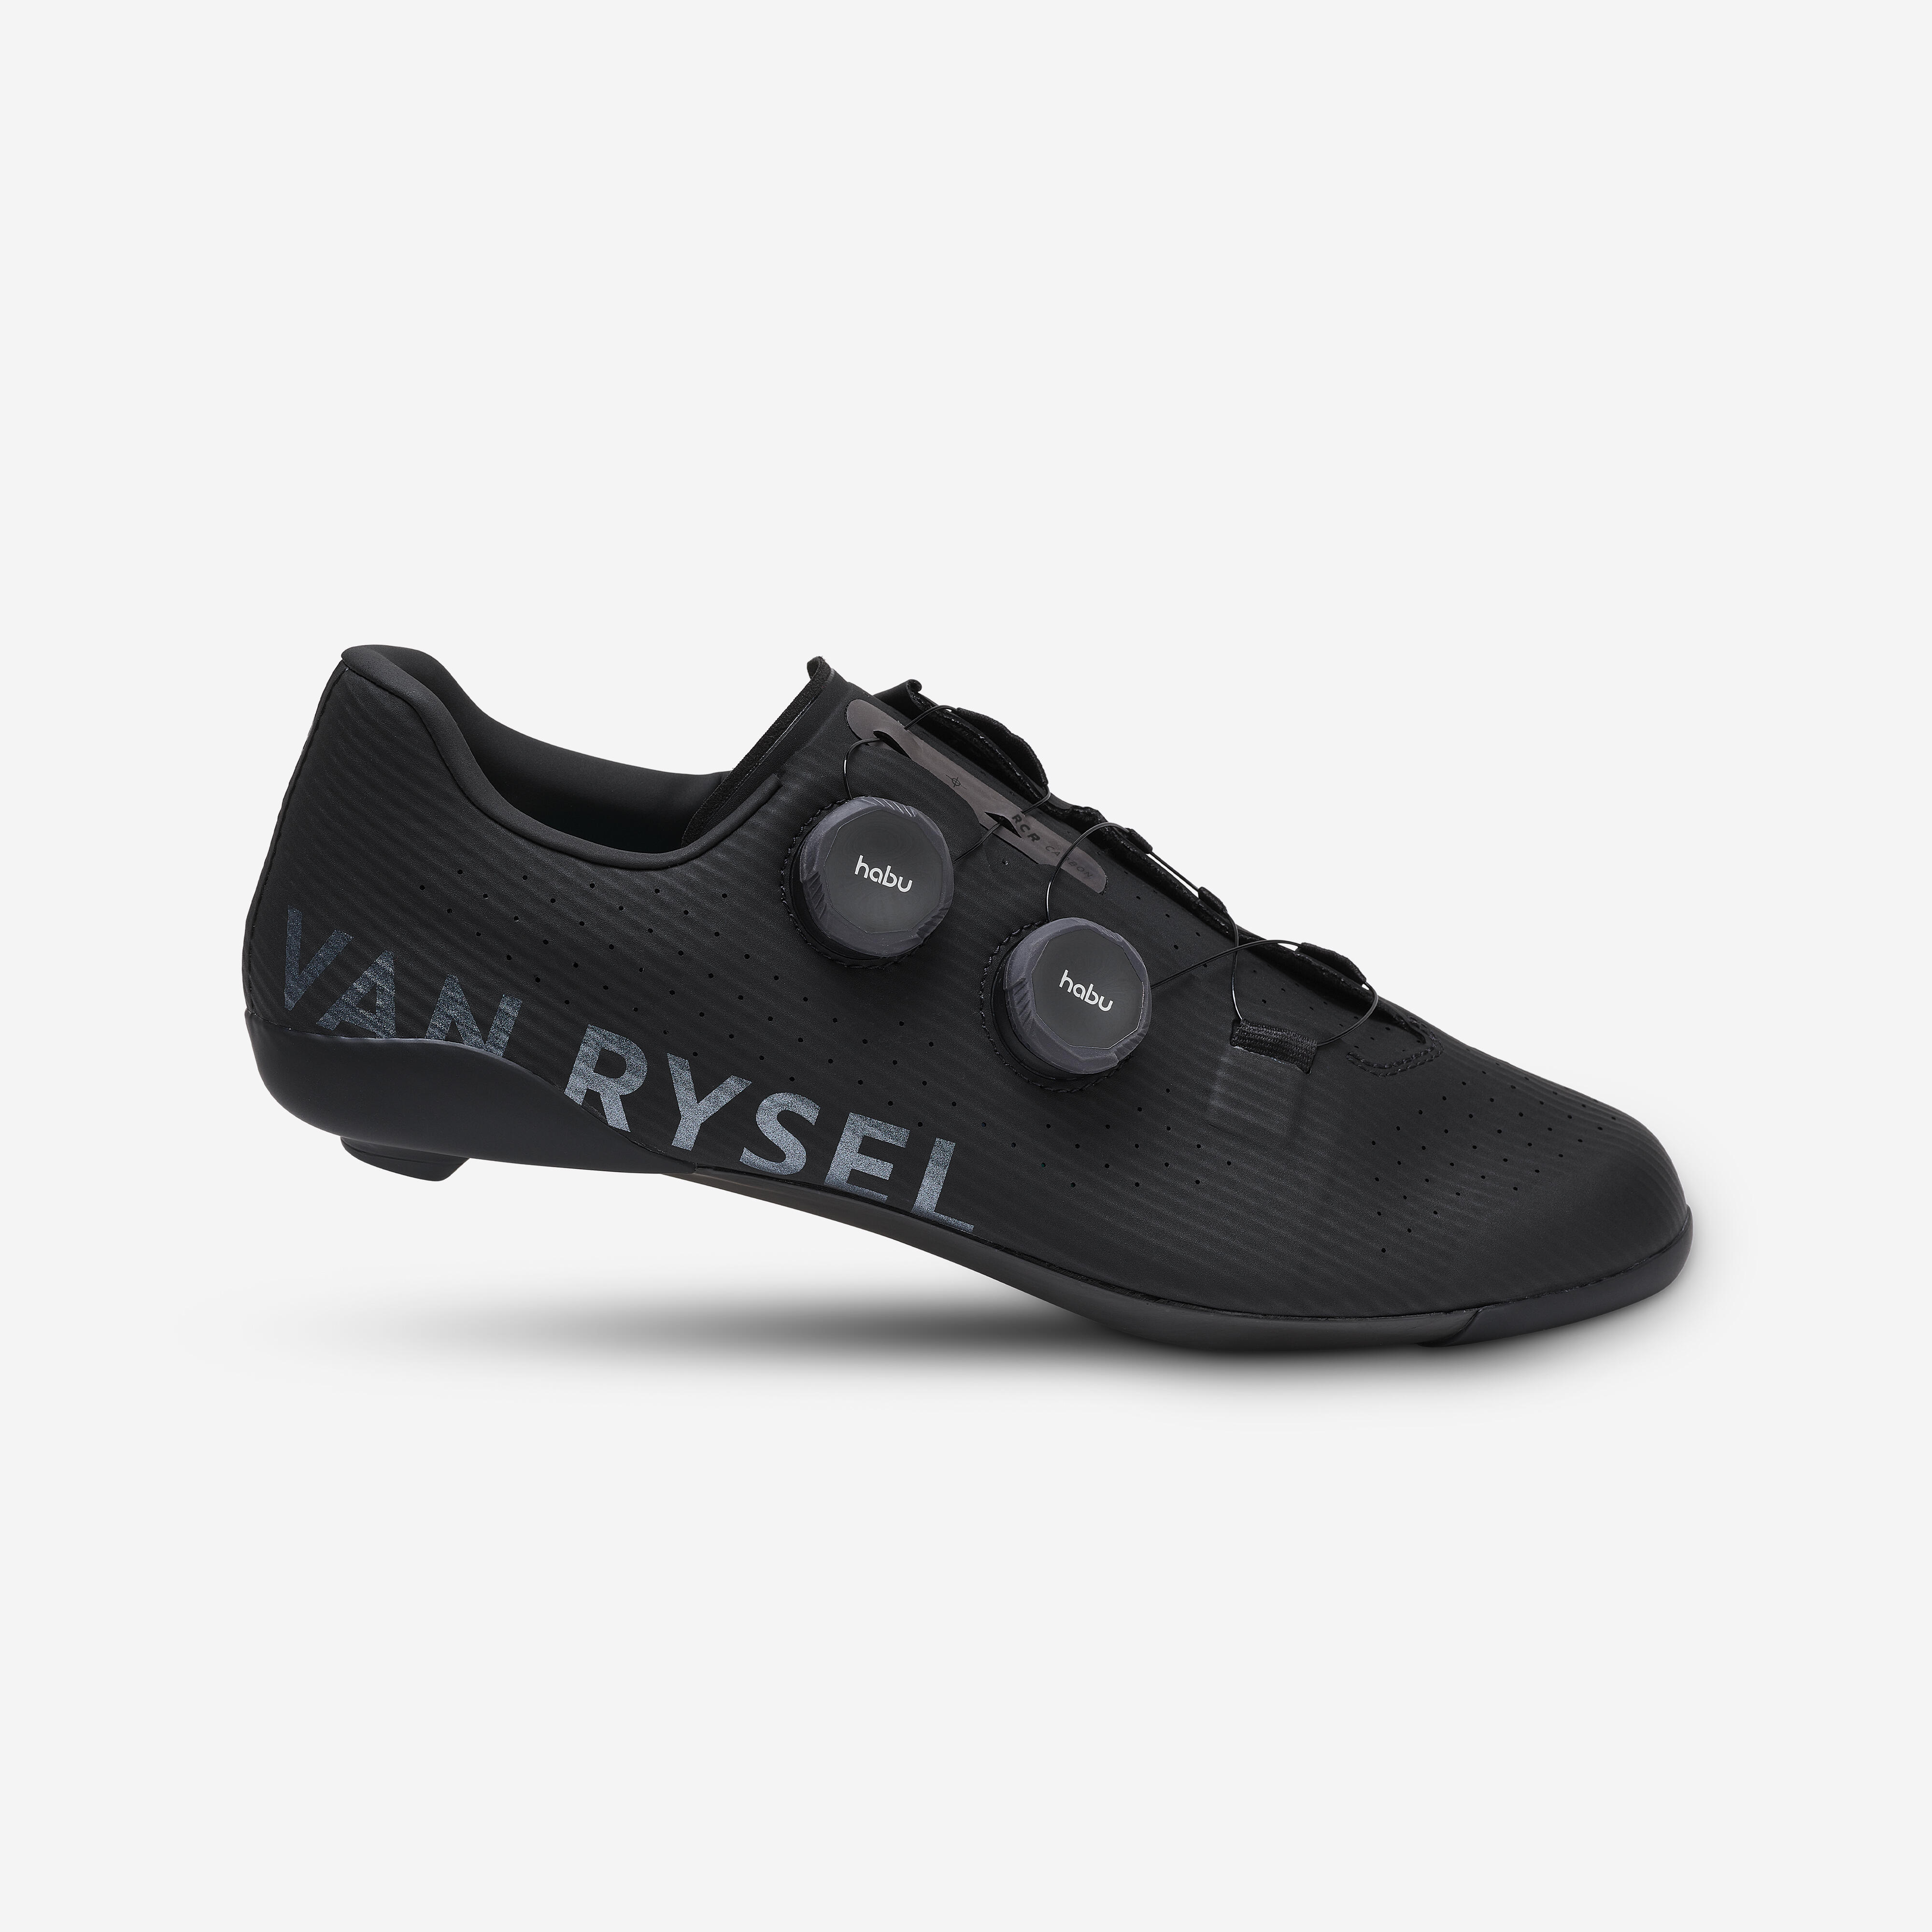 Van Rysel Road Cycling Shoes Rcr - Black